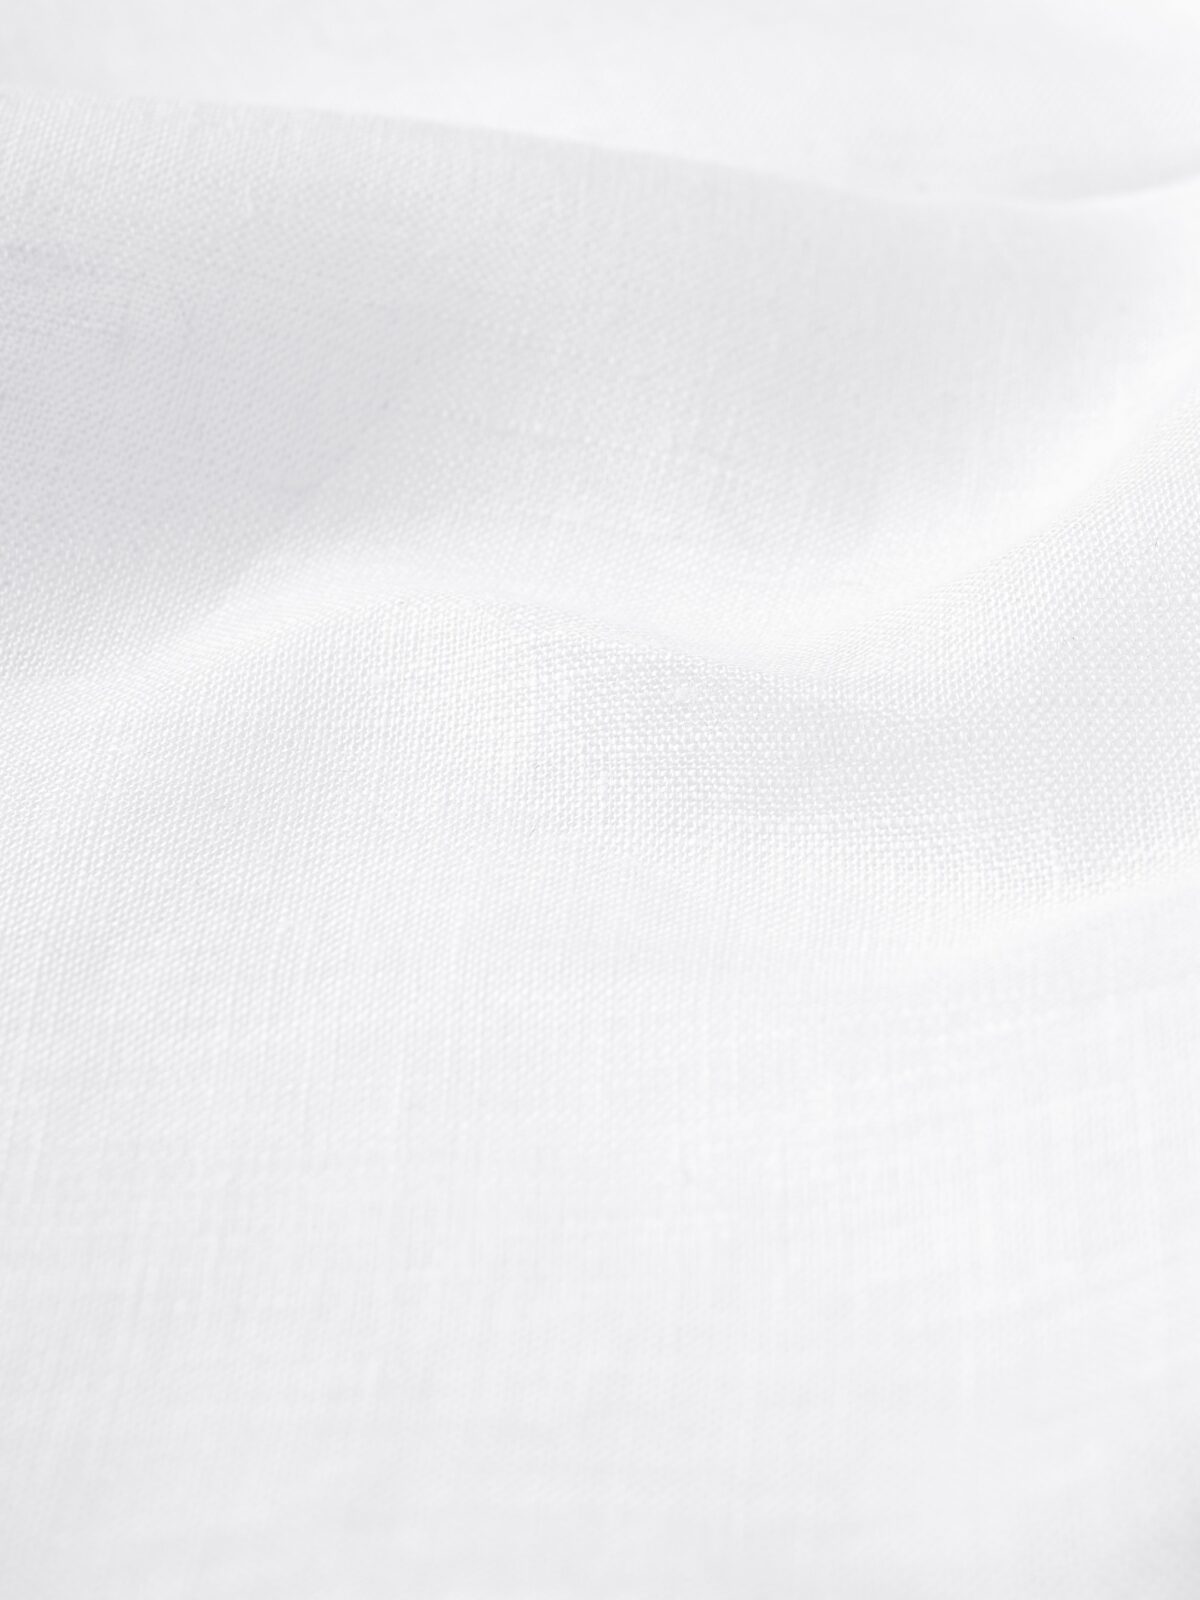 Essential White Linen Pocket Square